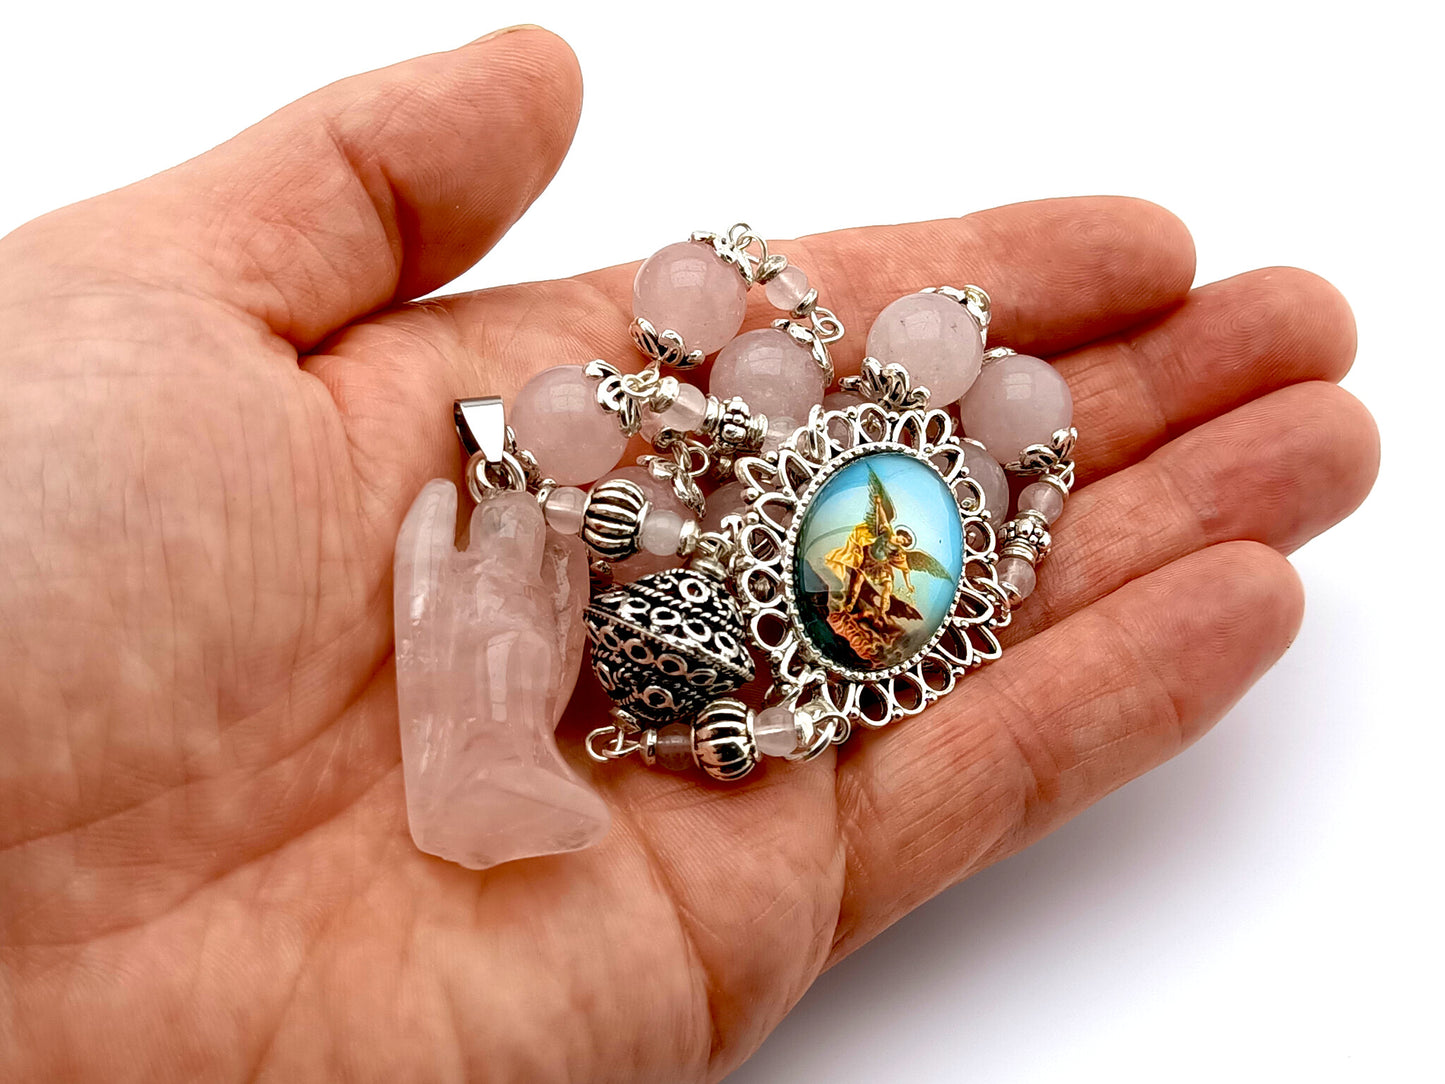 Rose quartz gemstone Saint Michael single decade rosary beads with Guardian Angel gemstone medal.